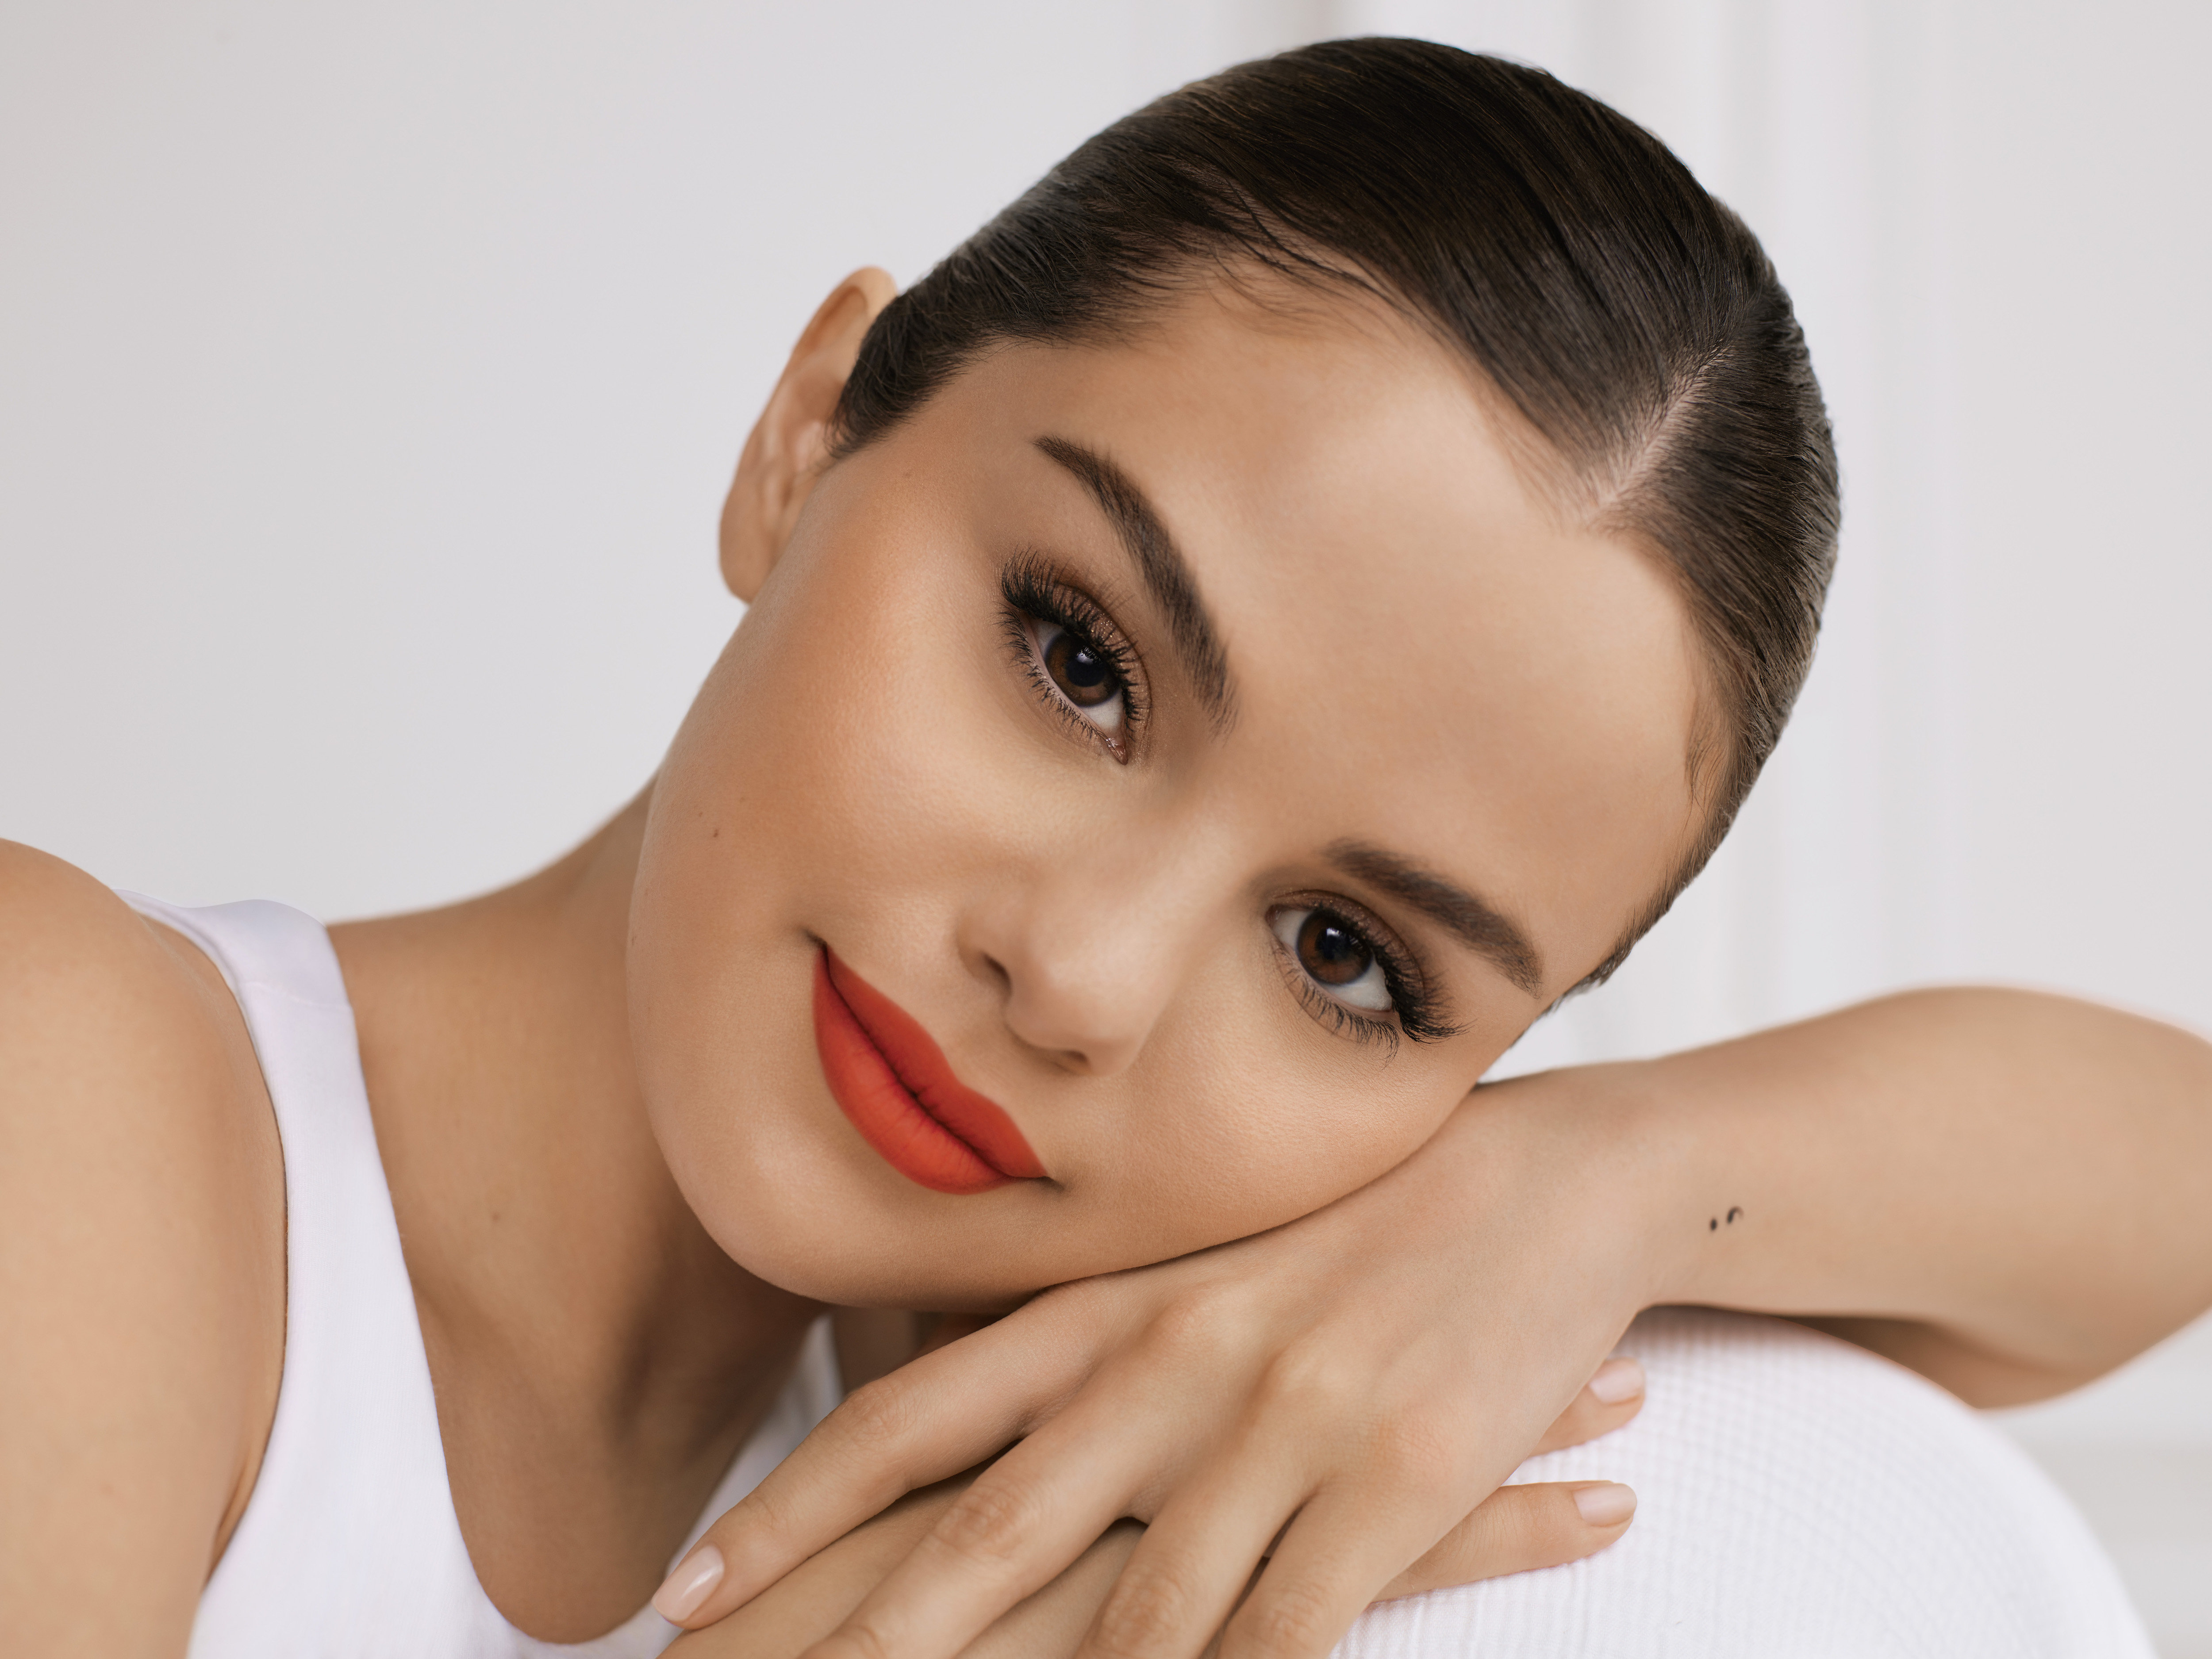 Fotos n°2 : Selena Gomez es un Gur de Maquillaje!